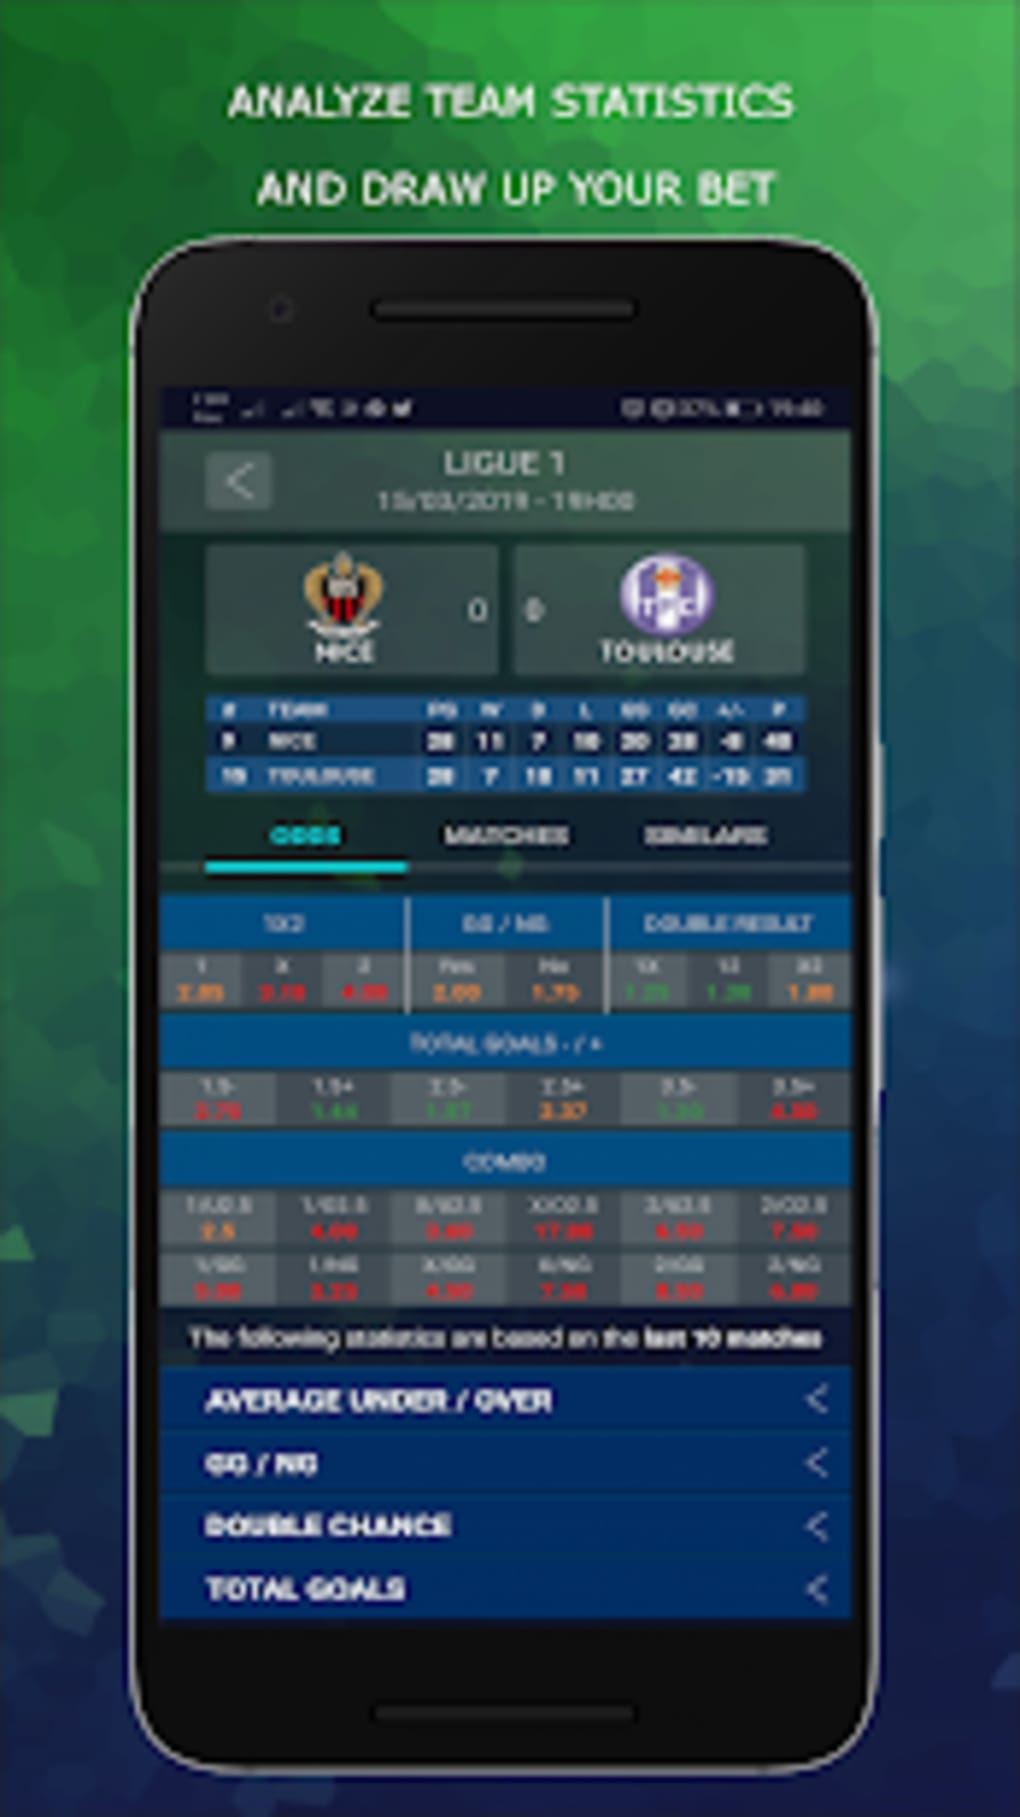 free download football prediction software